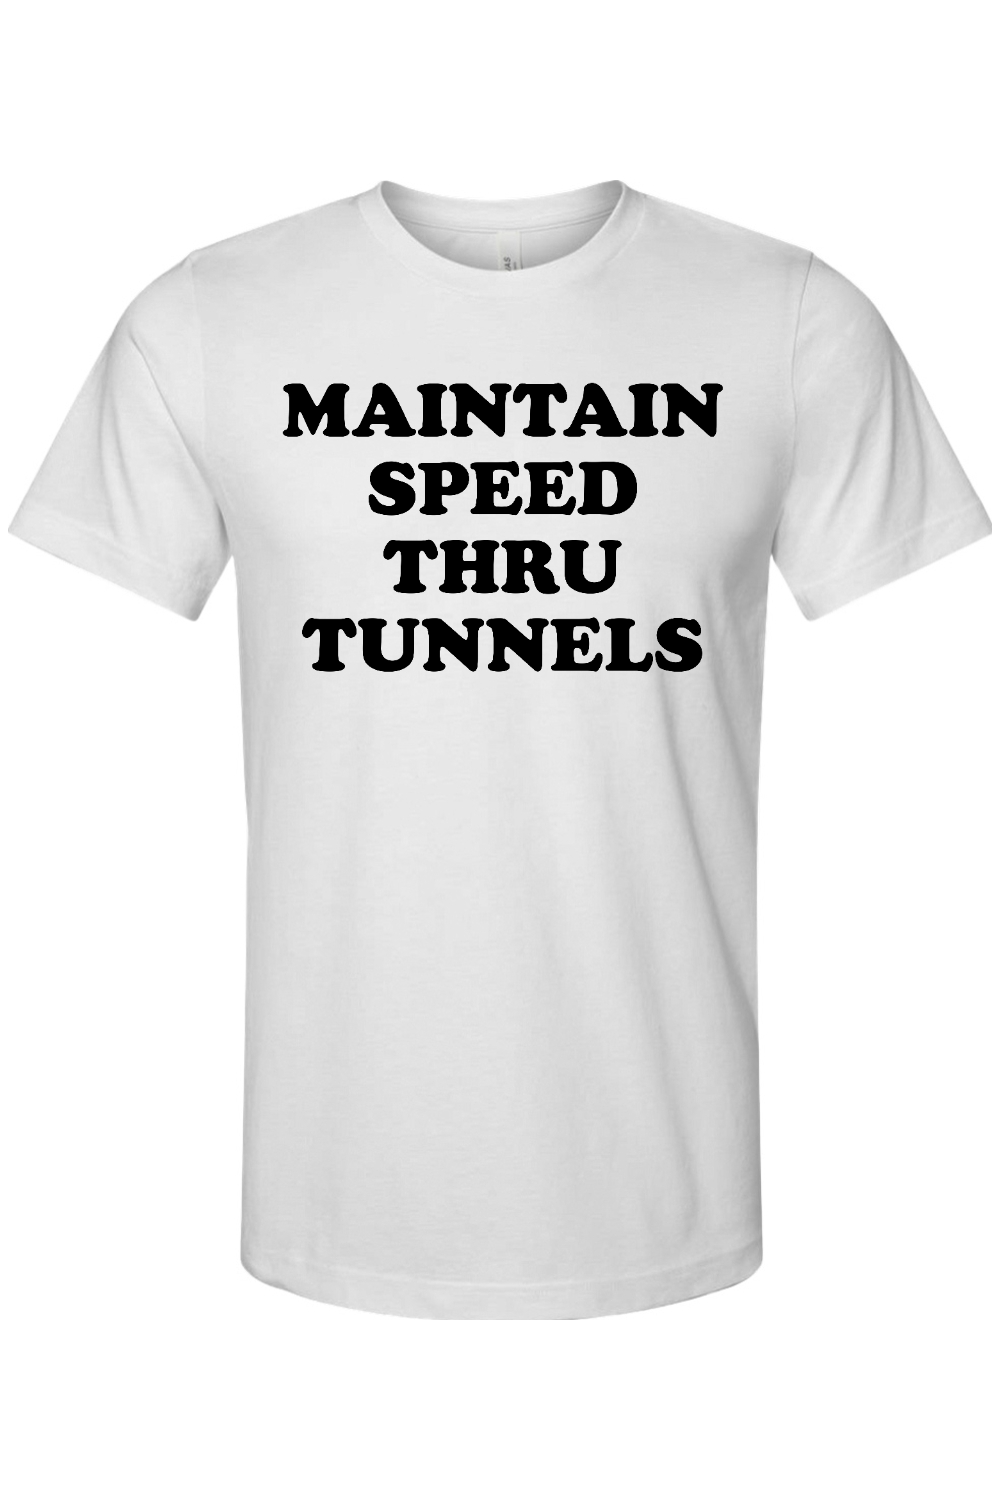 Maintain Speed Thru Tunnels - Bella + Canvas Jersey Tee - Yinzylvania